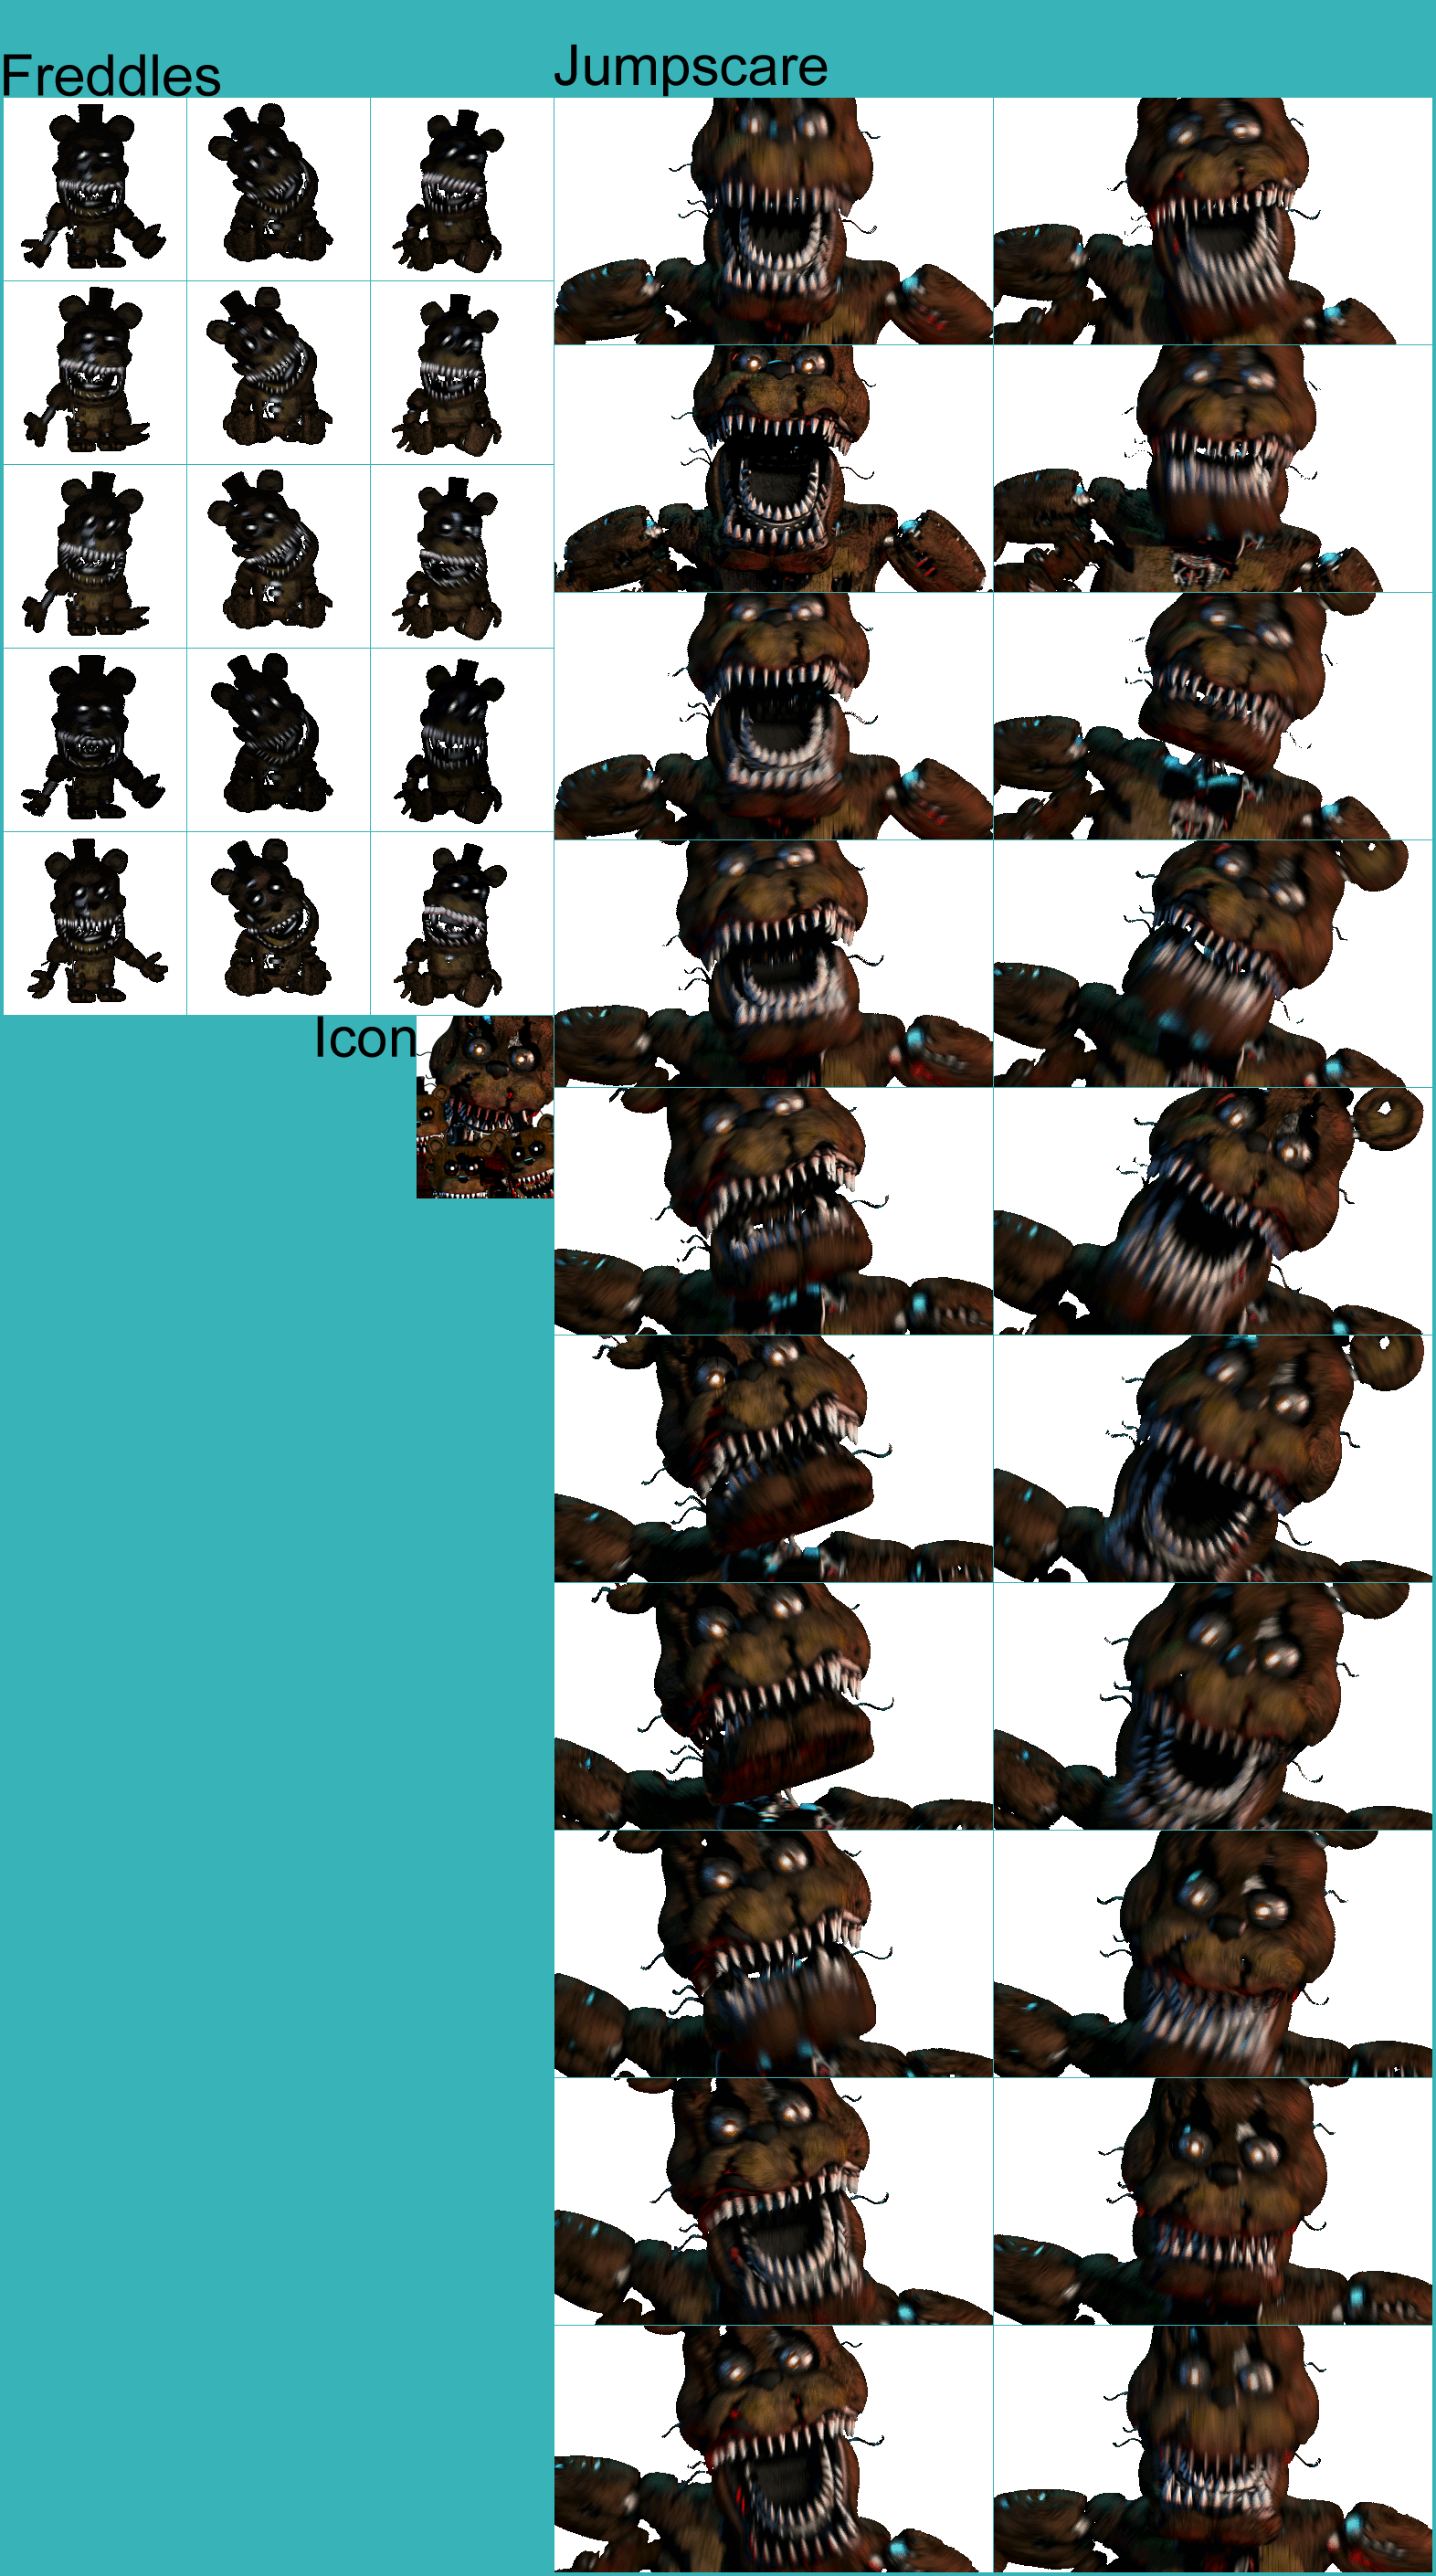 Ultimate Custom Night - Nightmare Freddy